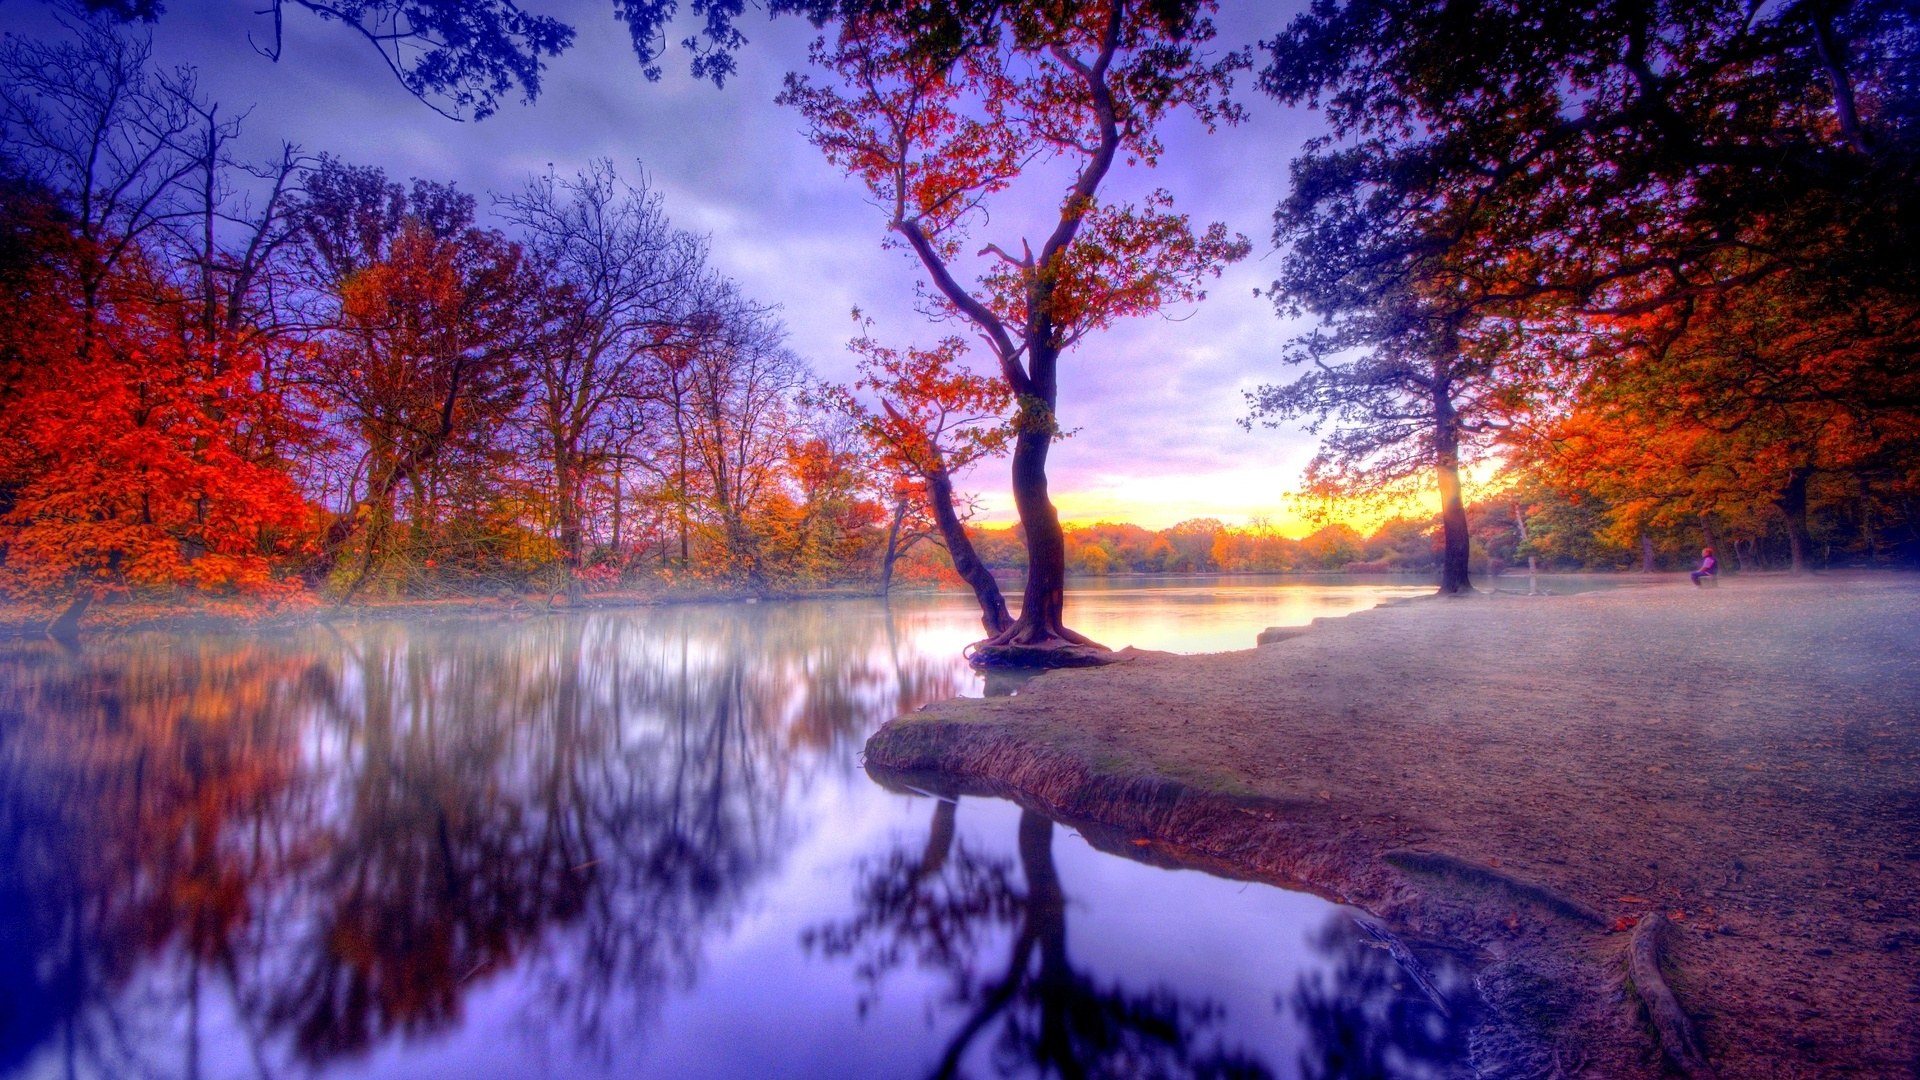 Autumn Landscape Full HD Desktop Wallpapers 1080p